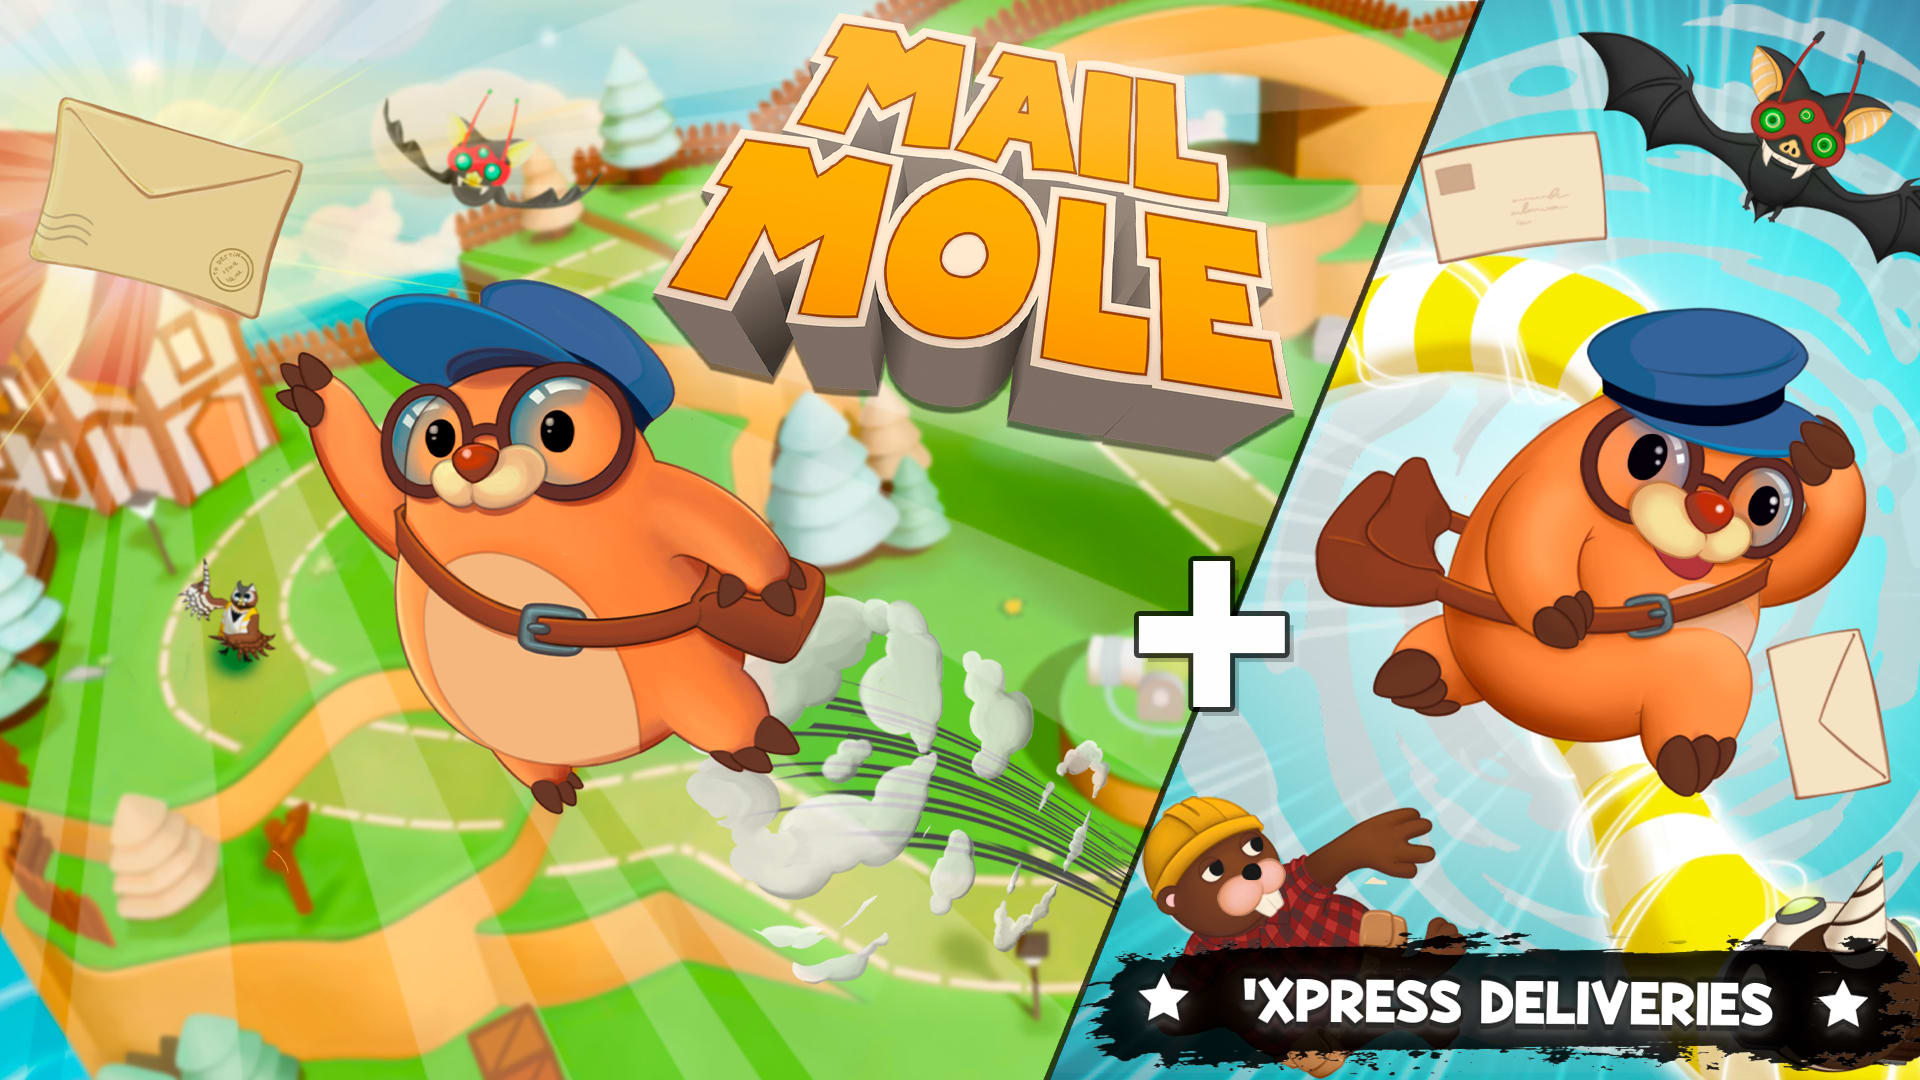 Mail Mole + 'Xpress Deliveries